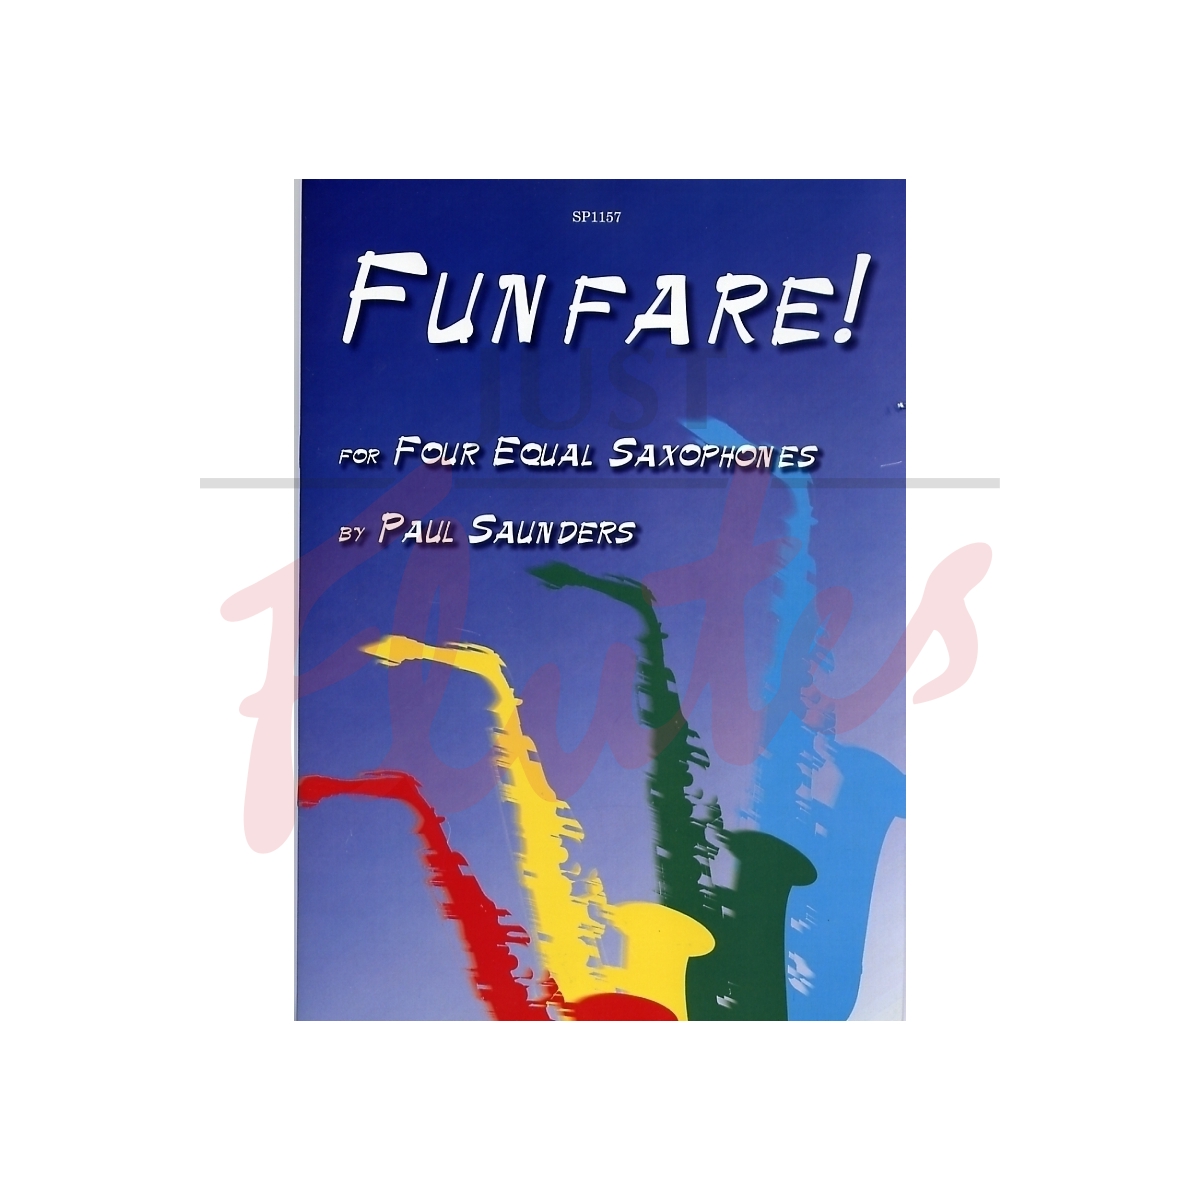 Funfare! for Four Equal Saxophones